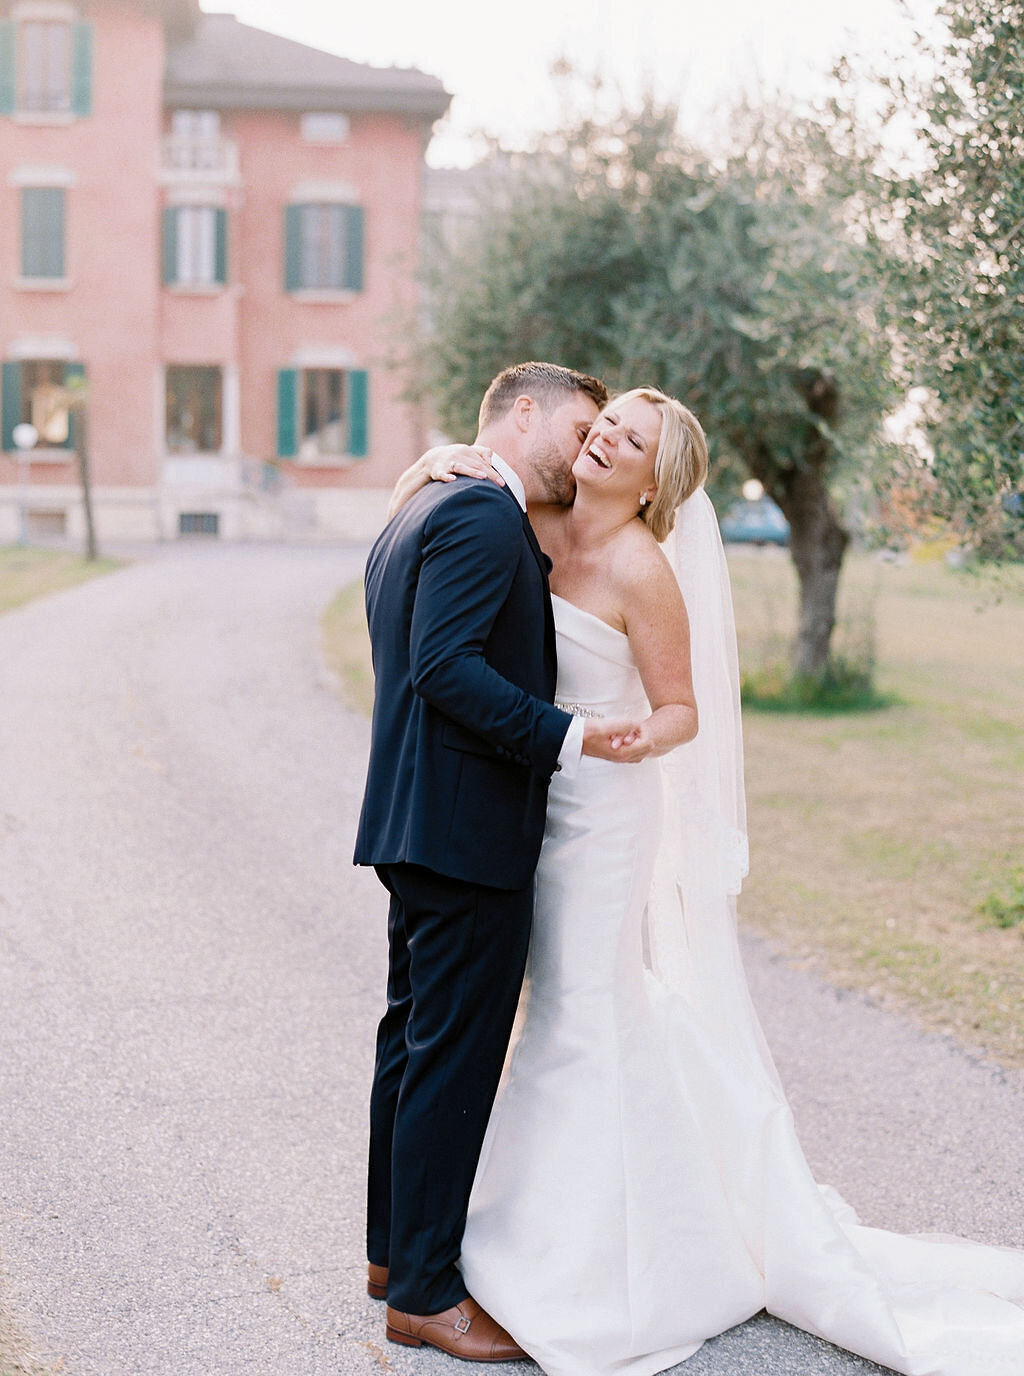 Destination Weddings | Twelfth Night Events - Italy Wedding Planner90